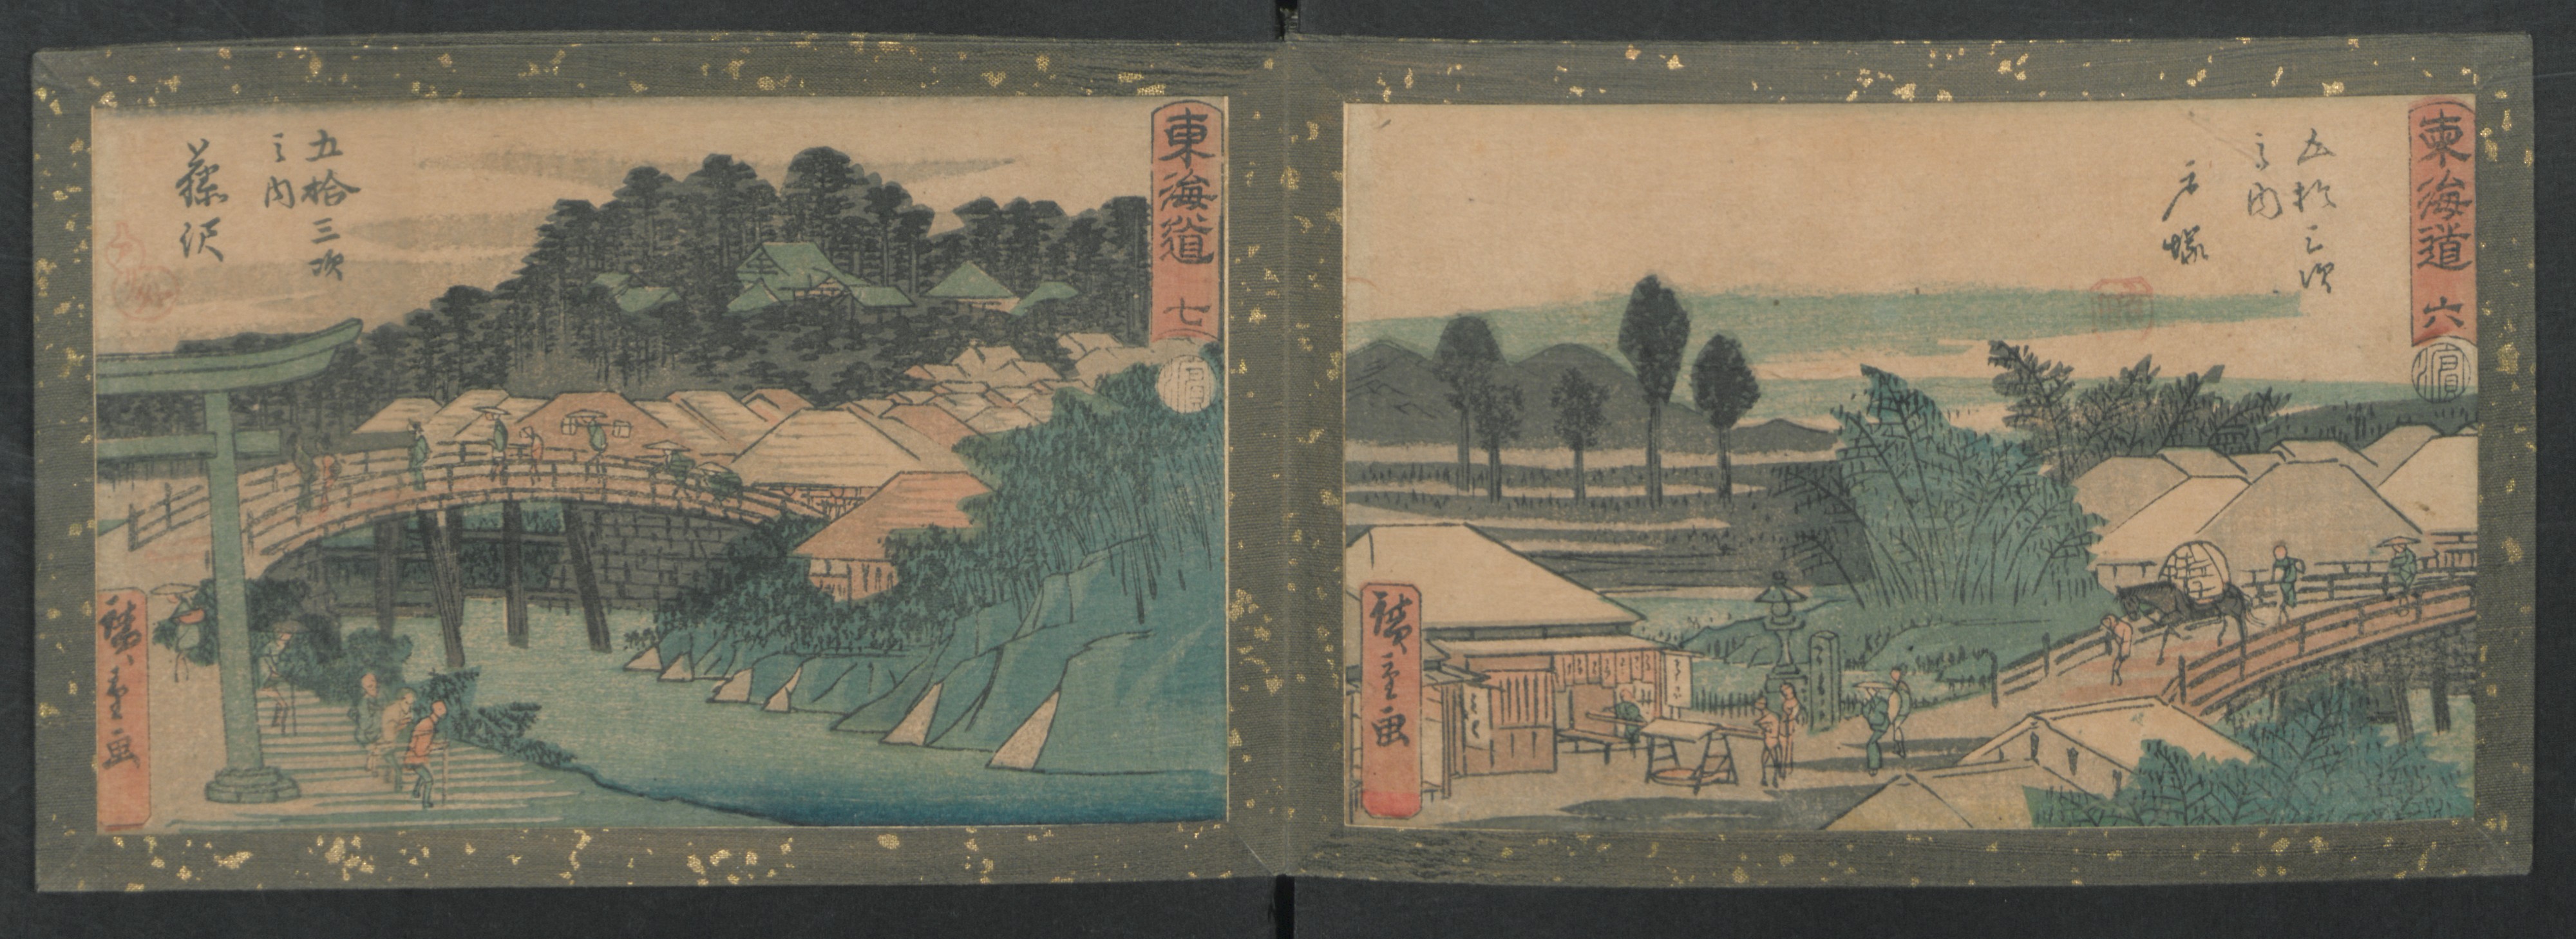 Utagawa Hiroshige 歌川広重 | Fifty-three Stations on the Tokaido 